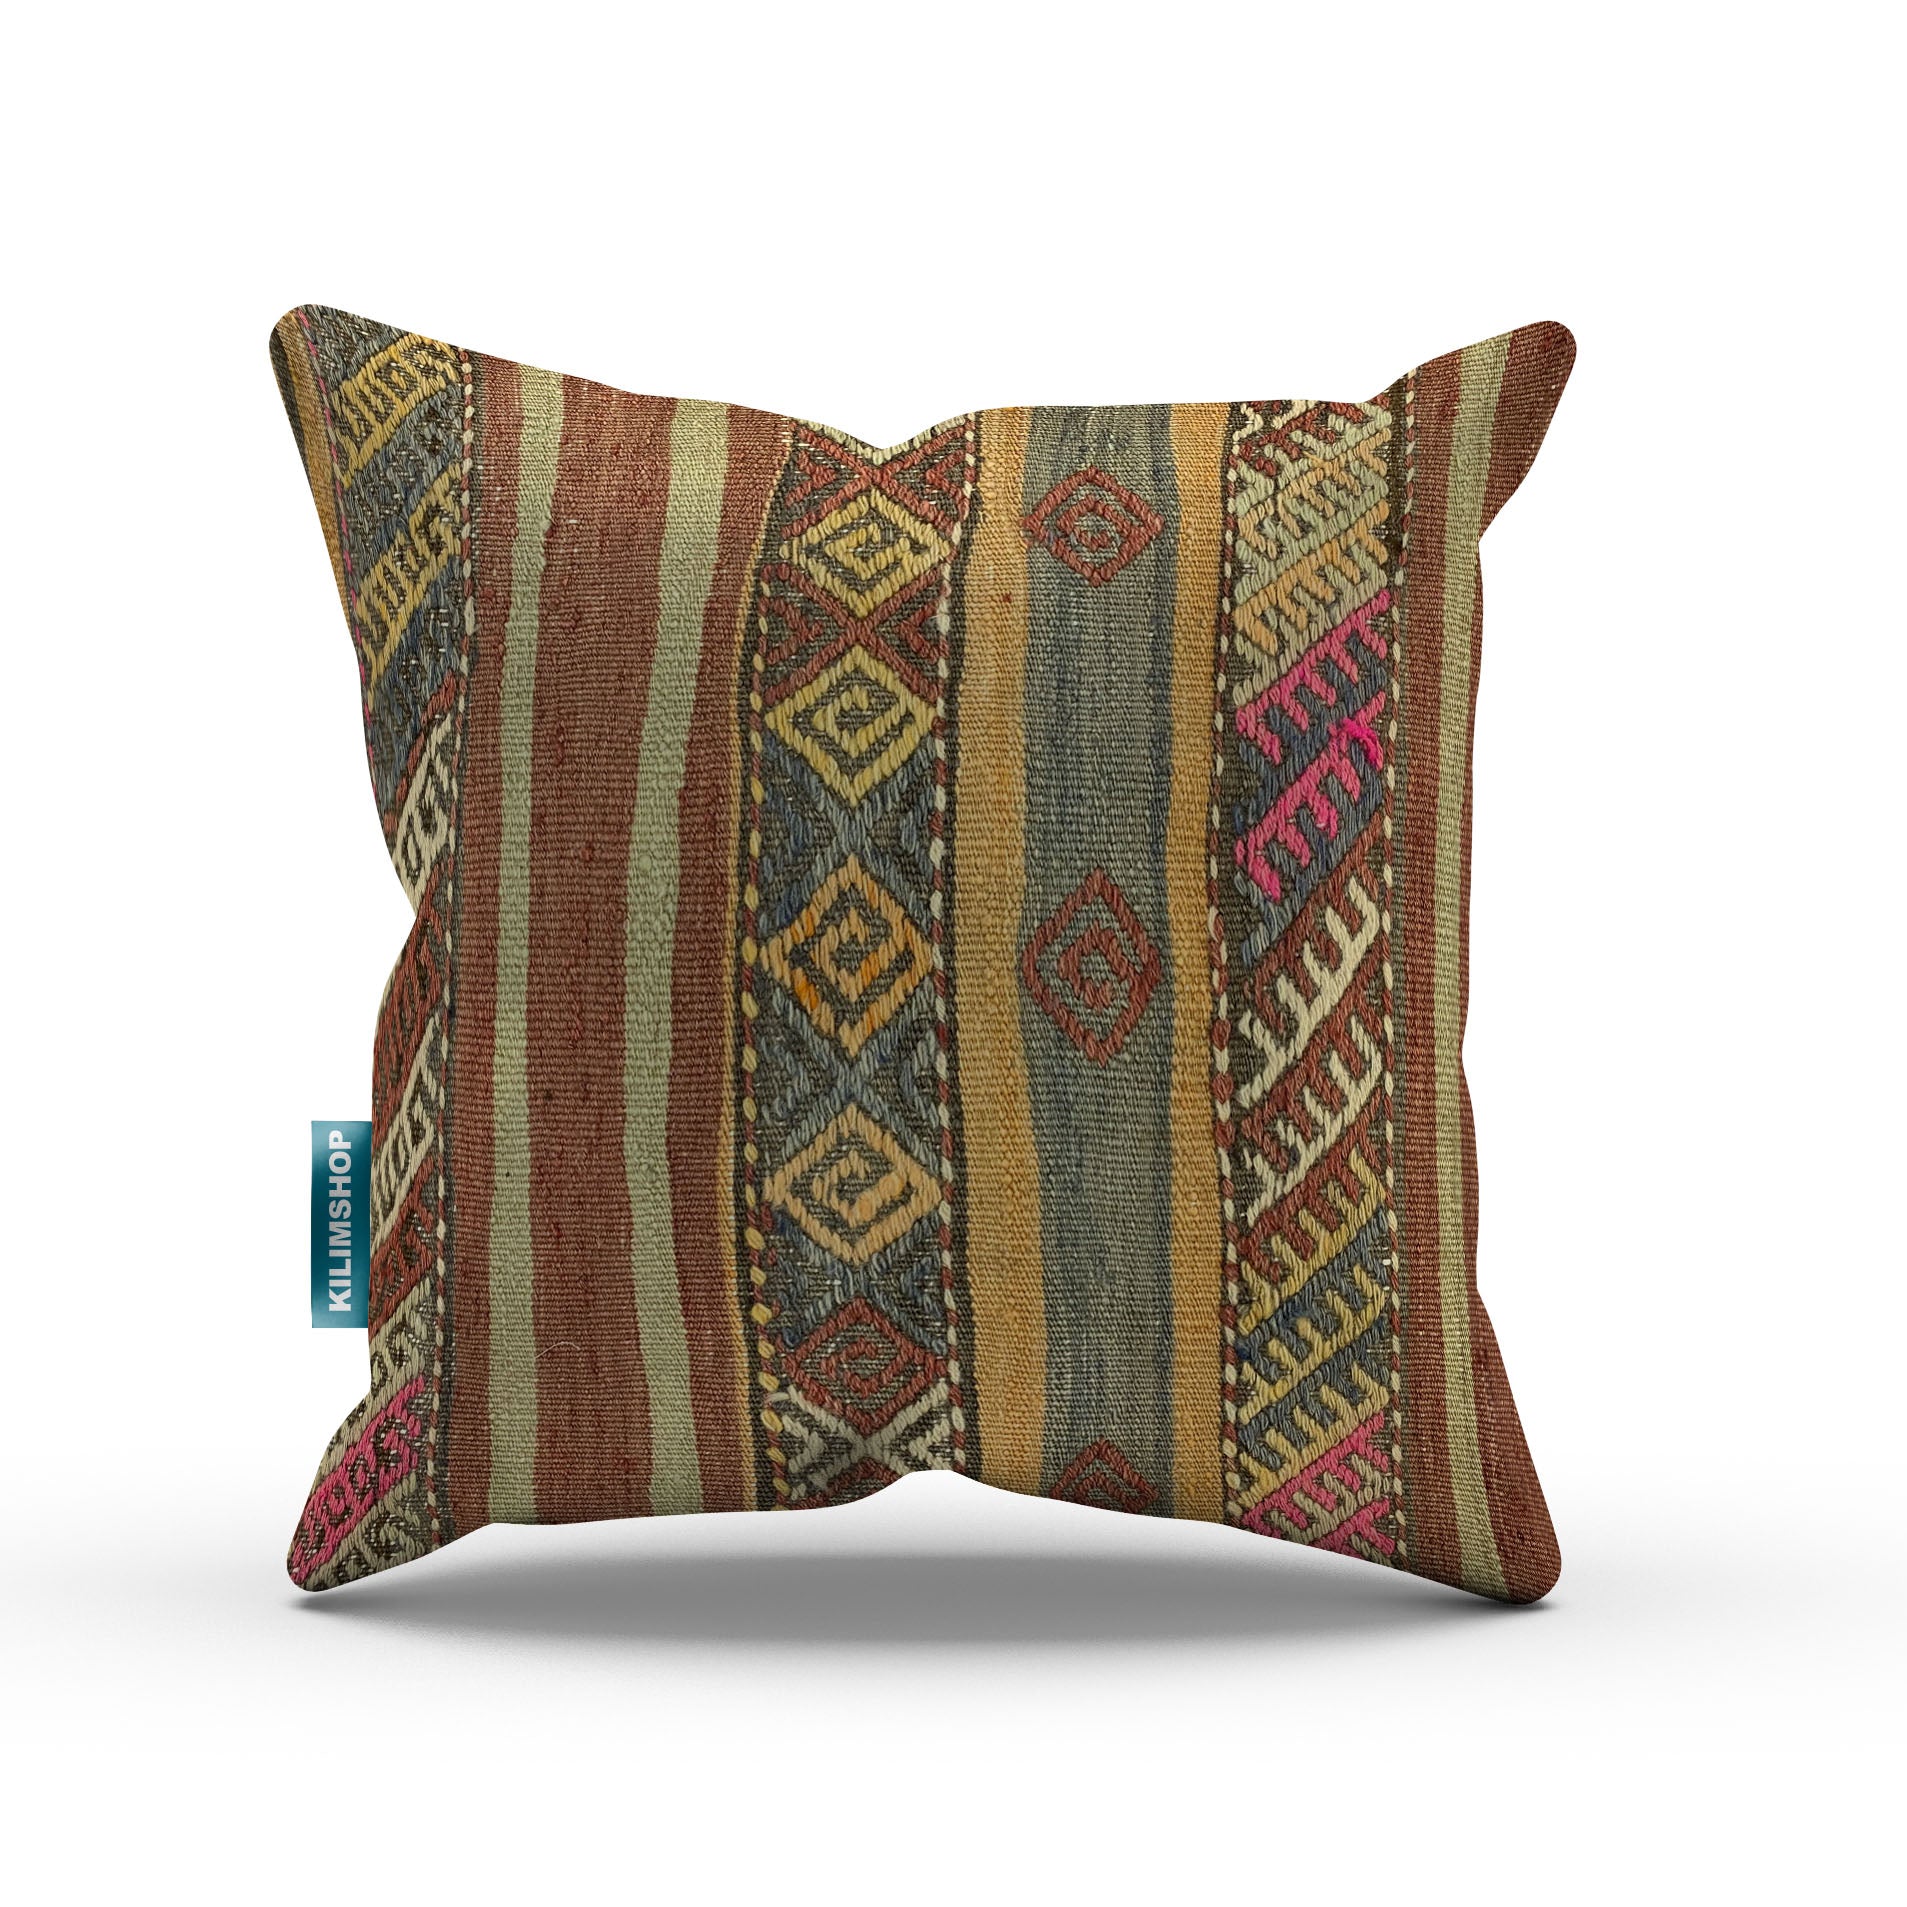 Vintage Turkish Kilim Cushion Cover 50x50 cm Square Wool Kelim Pillowcase 50506